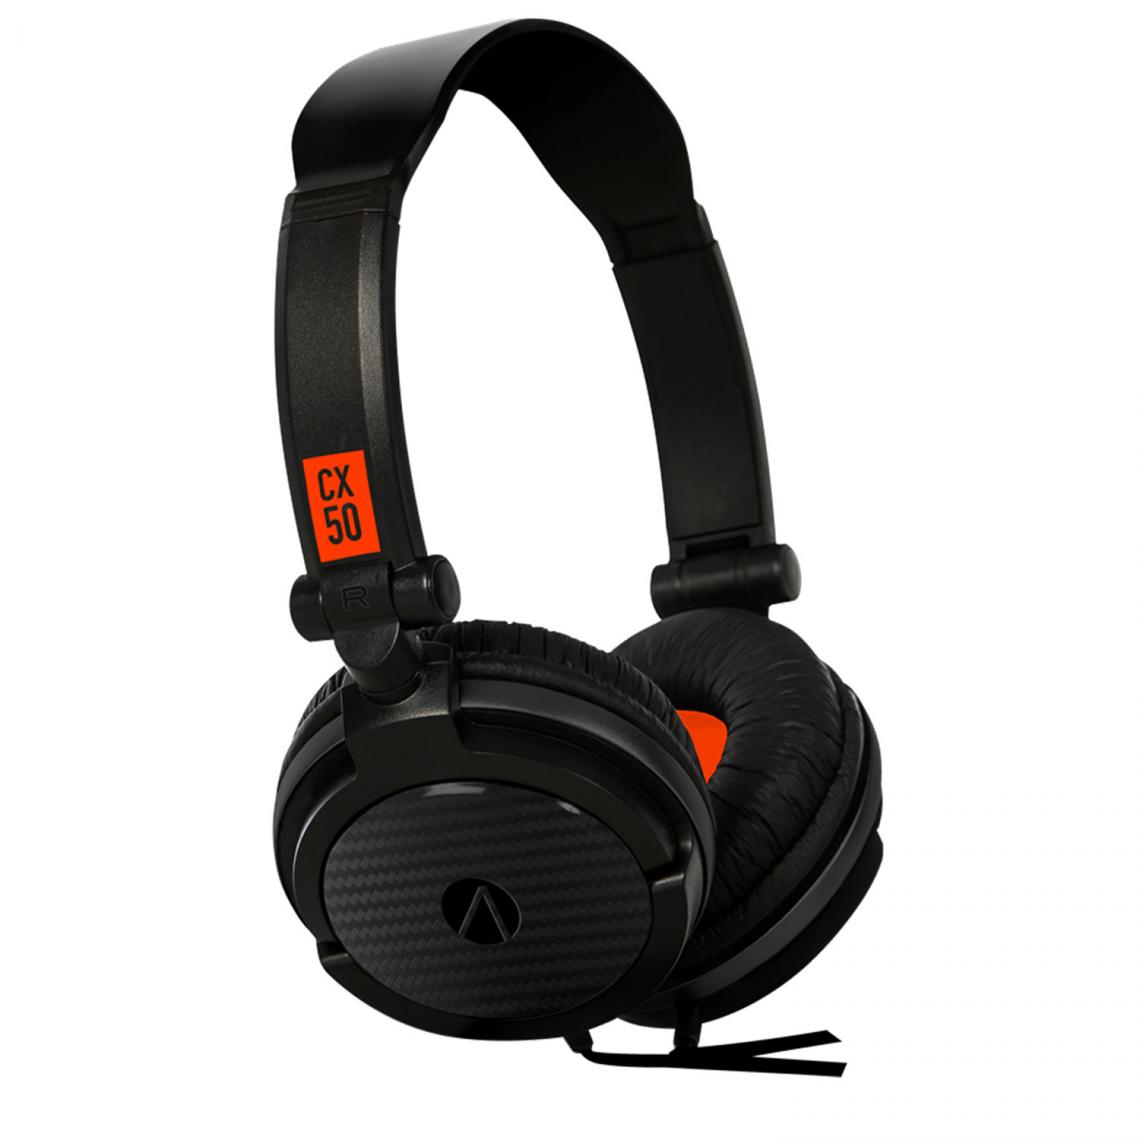 Stealth - Casque audio gamer Universel Stealth CX-50 Stealth - Noir carbon / Orange - Fonction mute pour Xbox / PS4 / PS5 / switch - Casque